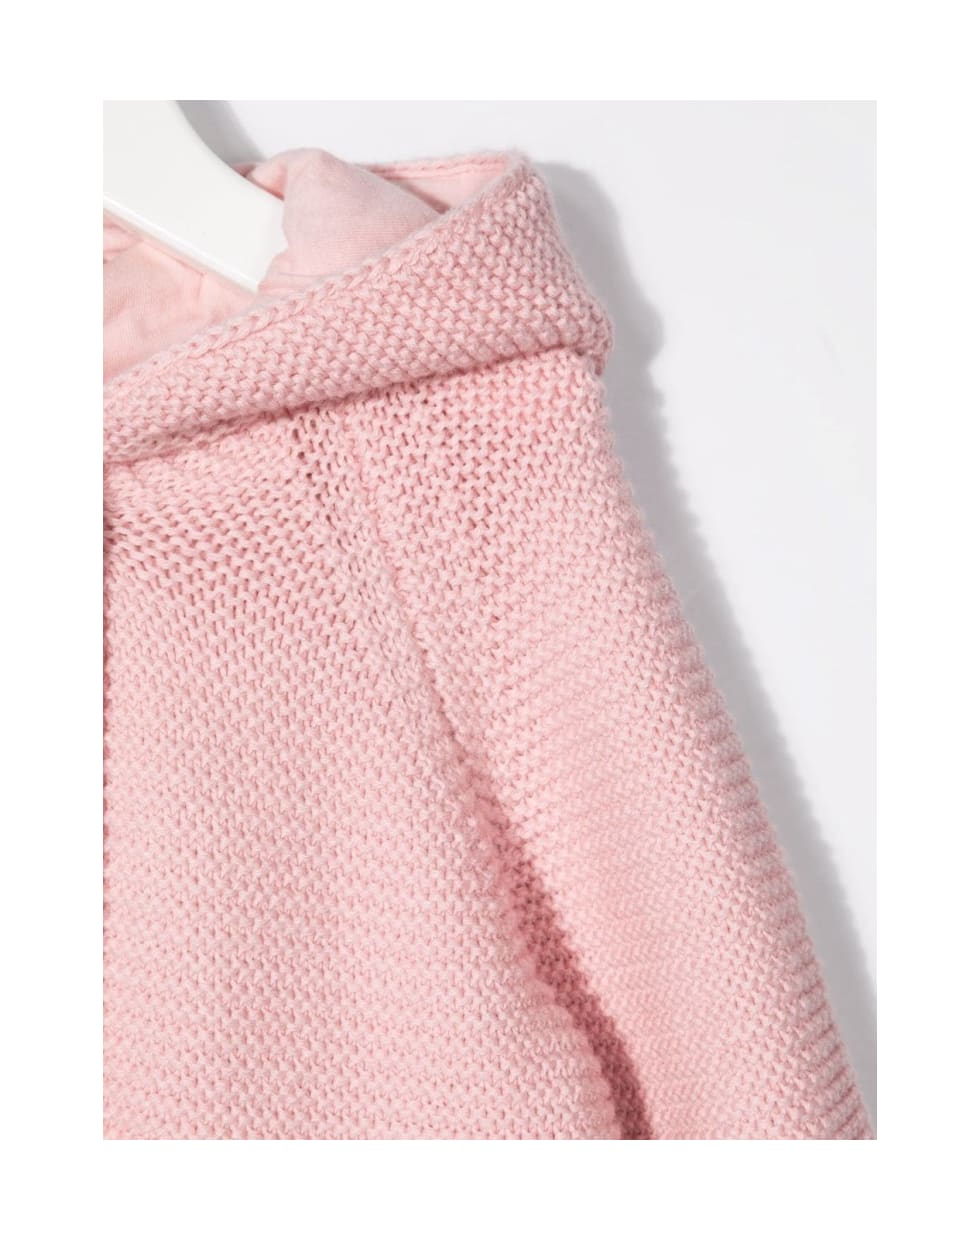 Stella McCartney Kids Pink Knit Cardigan With Ears Detail - Pink